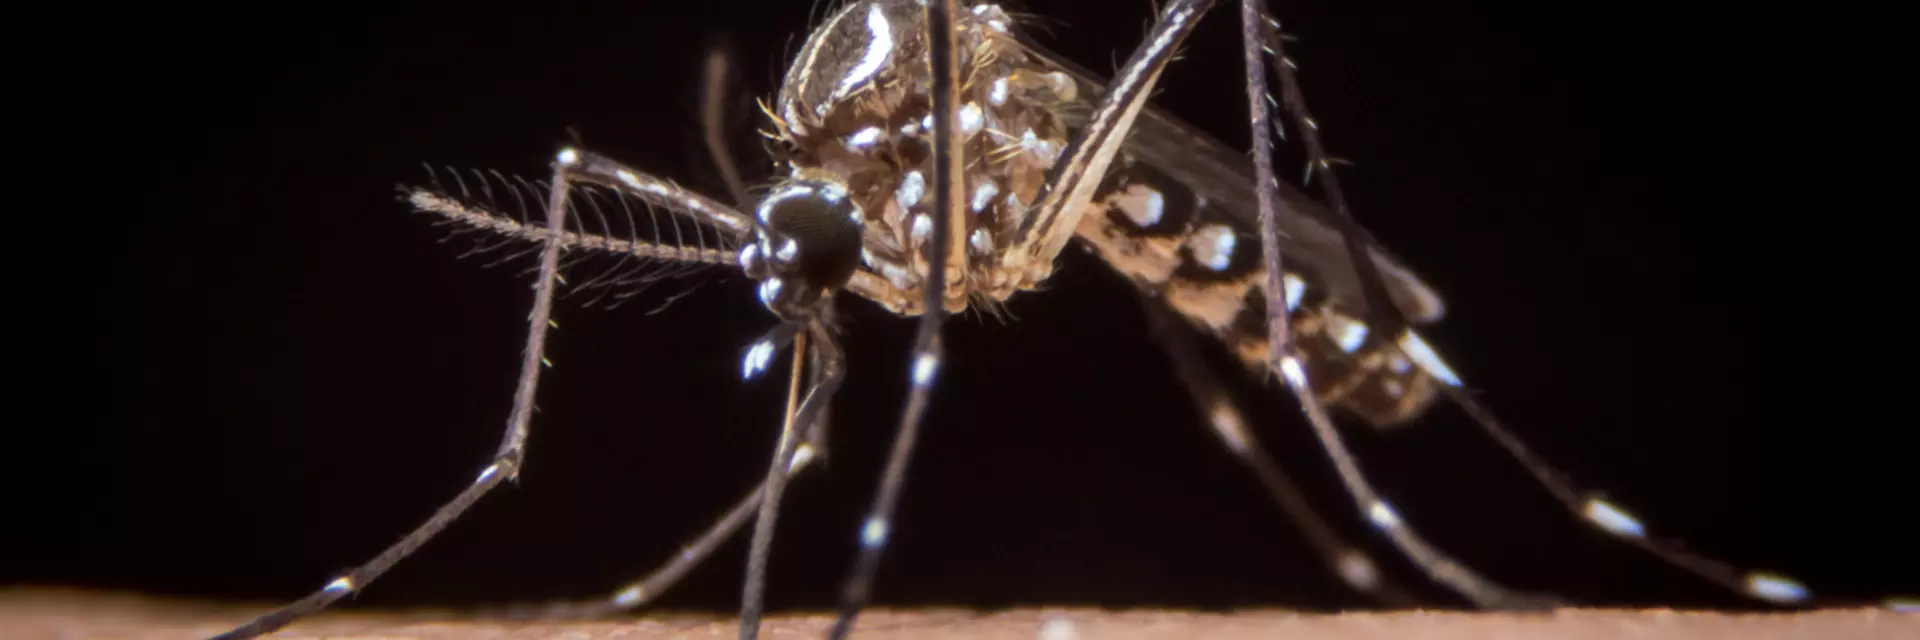 Aedes aegypti mosquito 